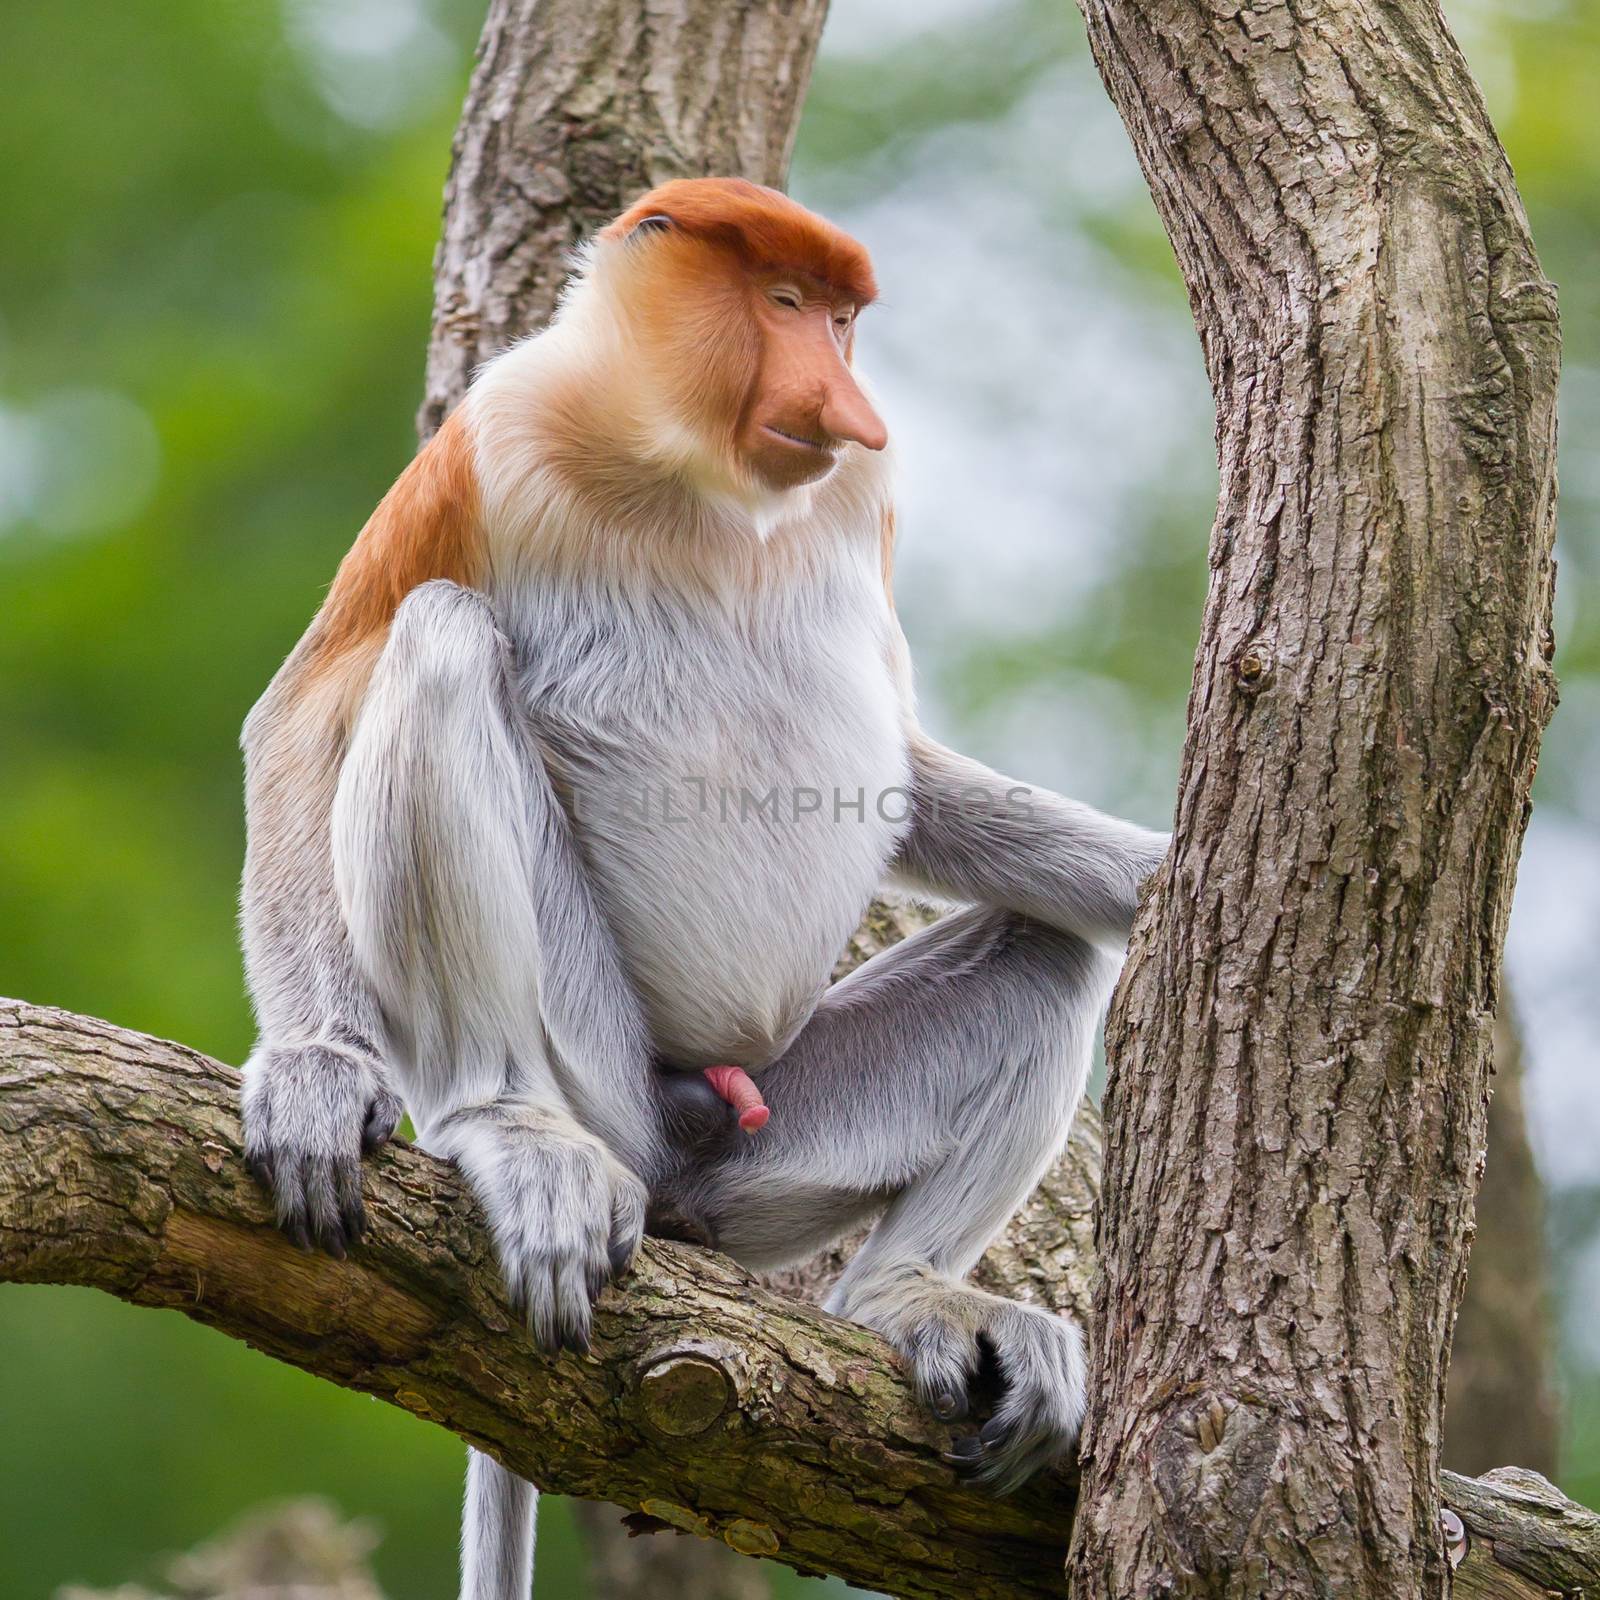 Proboscis monkey in a tree by michaklootwijk